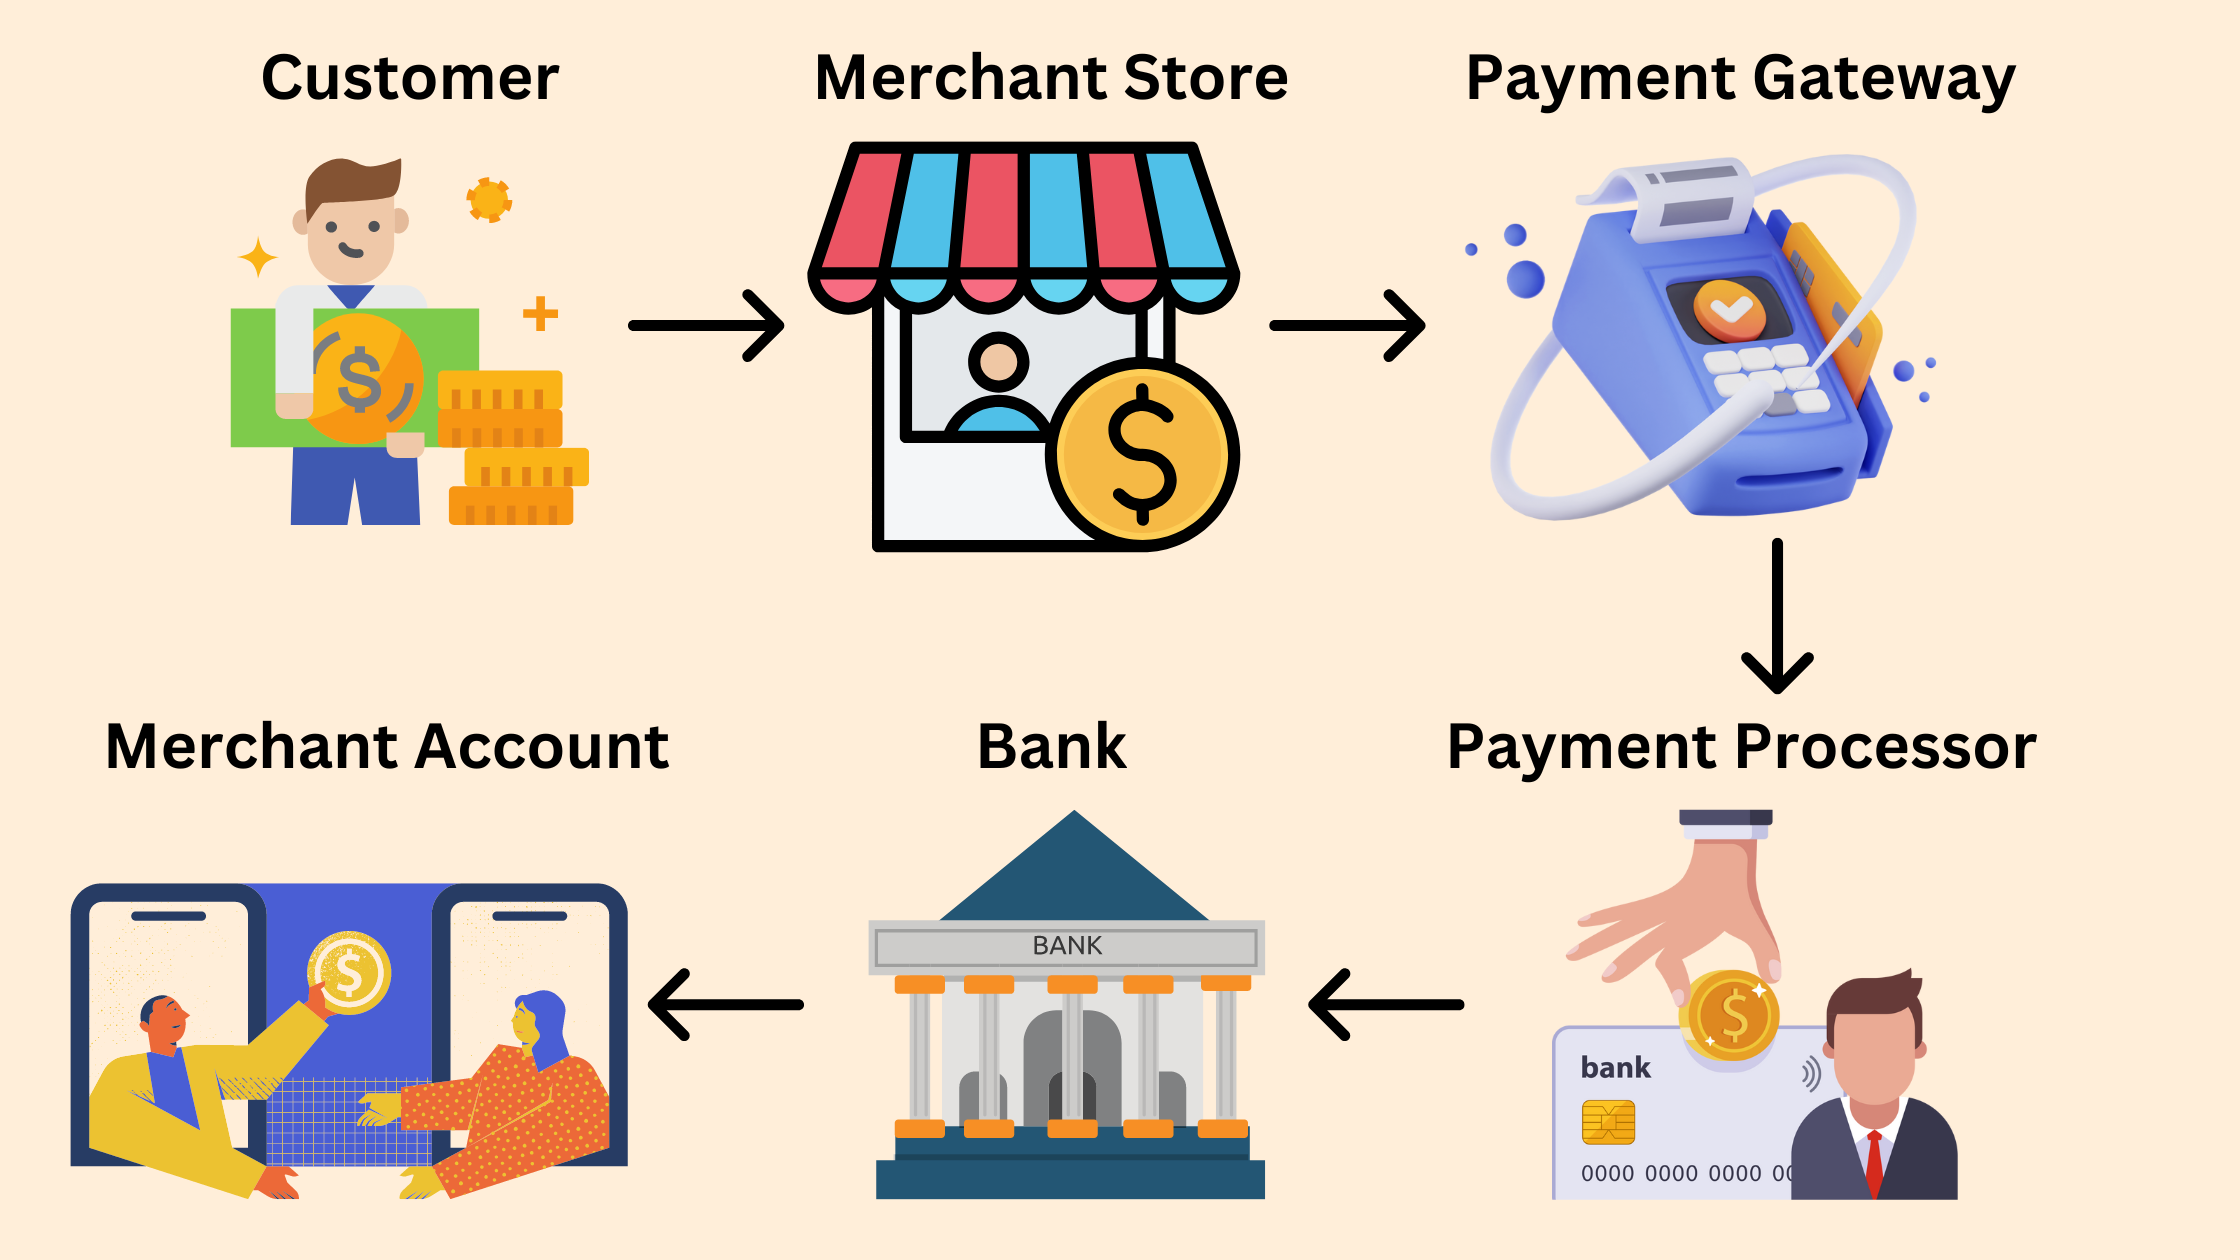 Understanding how payment gateways work